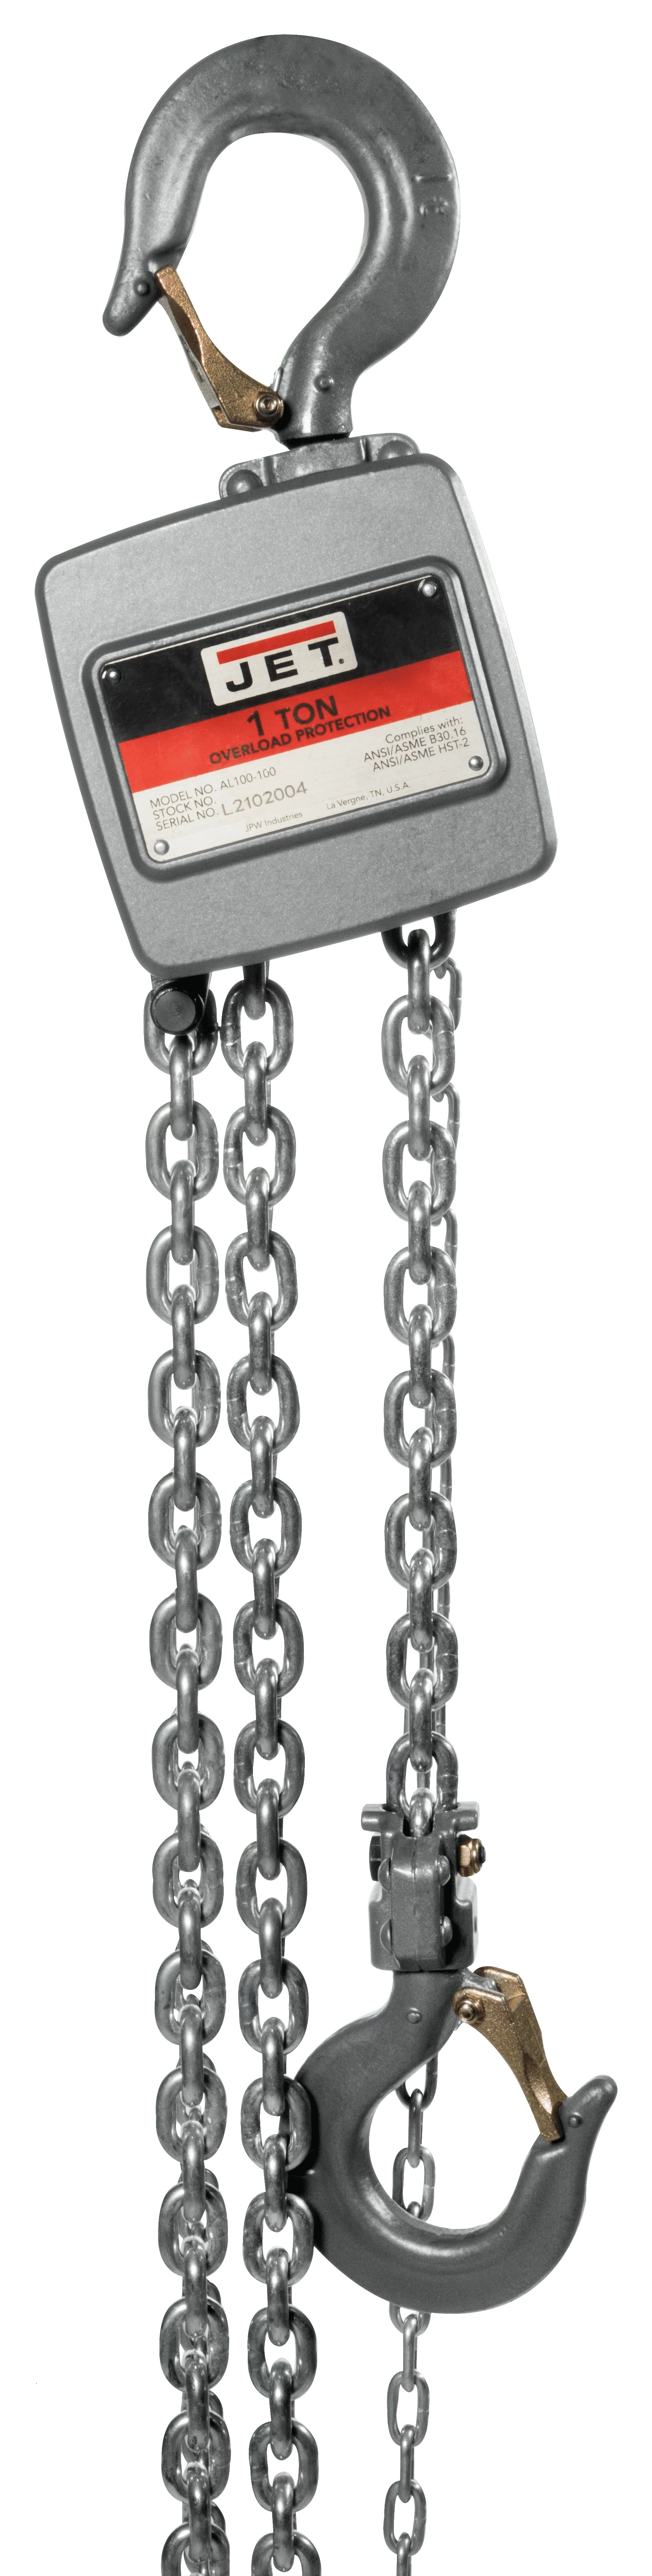 AL100-100-30 1 Ton Aluminum Hand Chain Hoist with 30ft of Lift